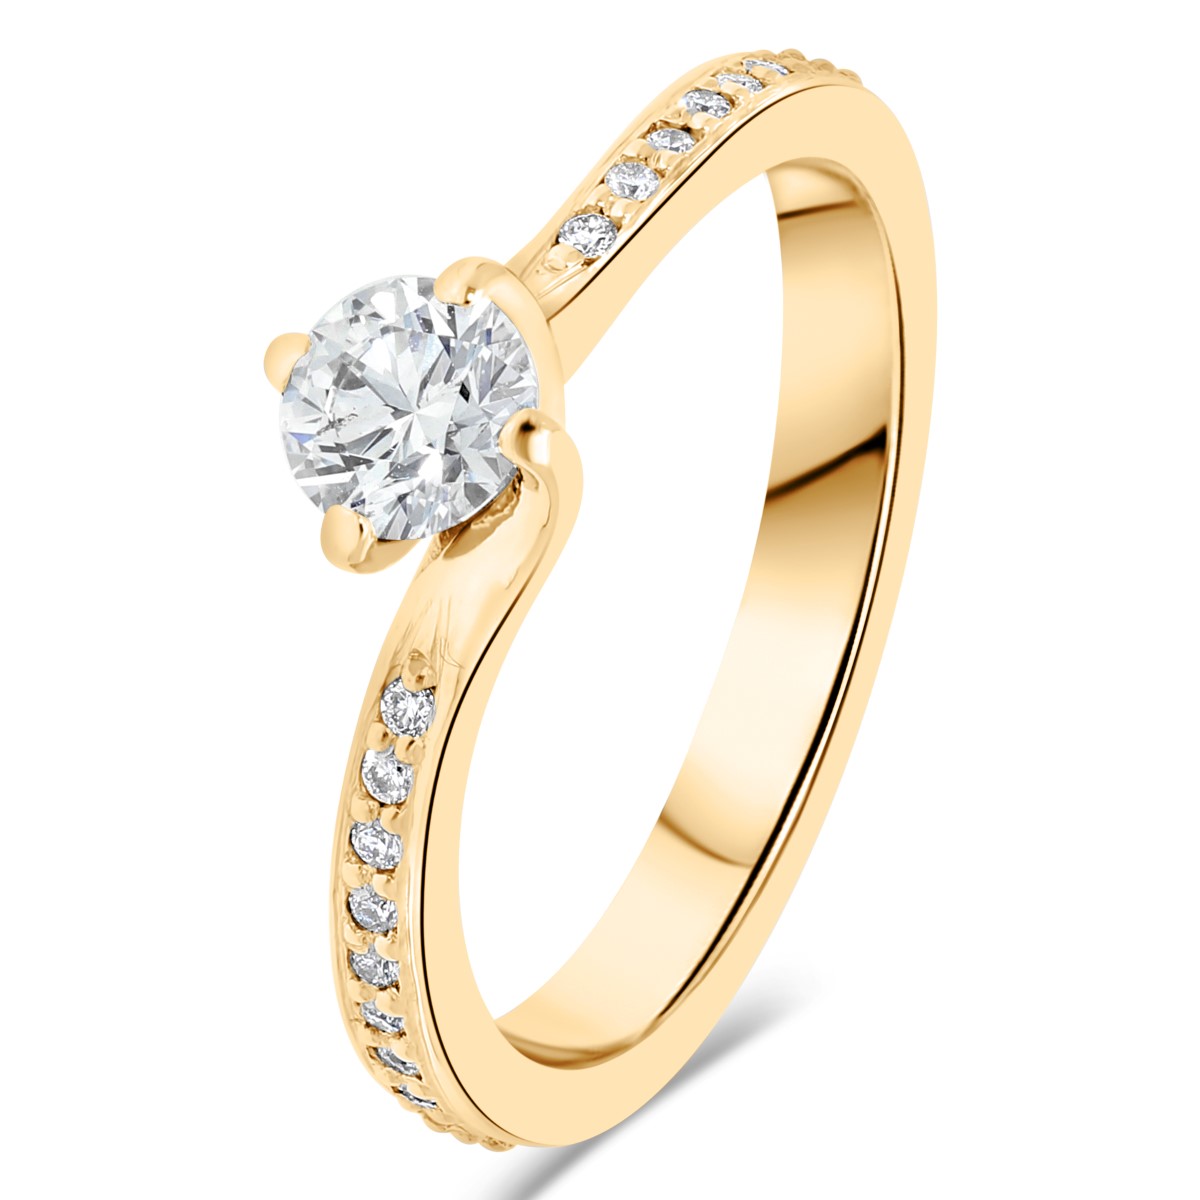 hivaoa-solitaires-diamants-certifies-accompagne-or-jaune-750-